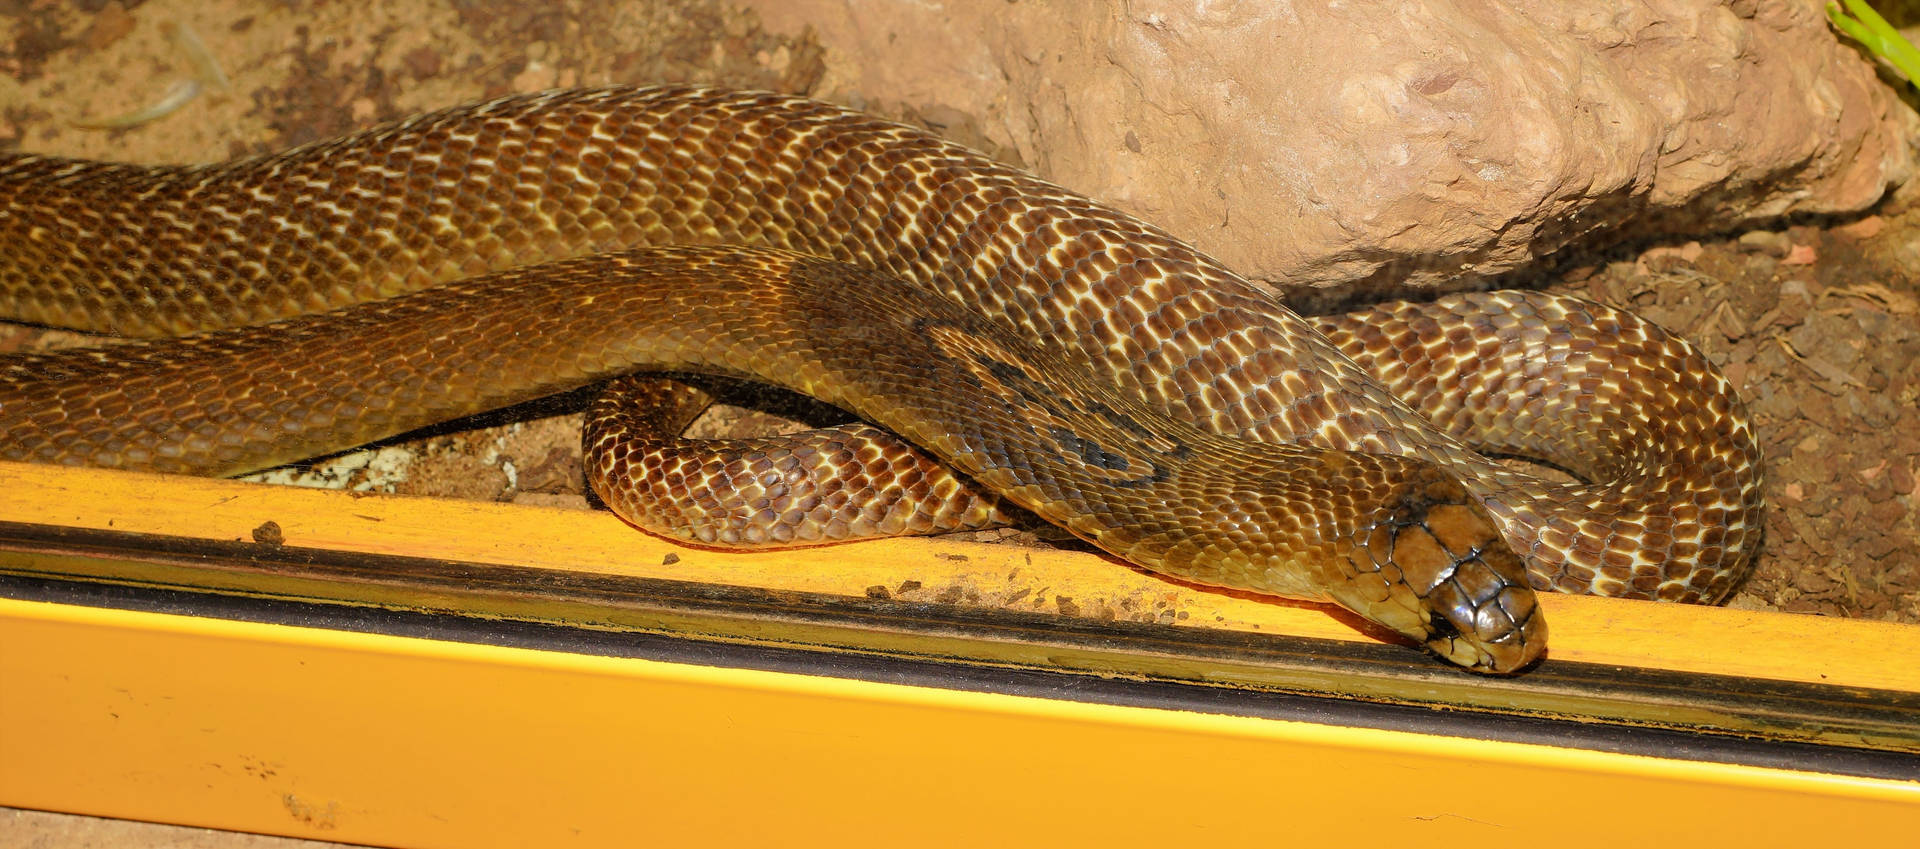 Taipan Snake In Aquarium Wallpaper